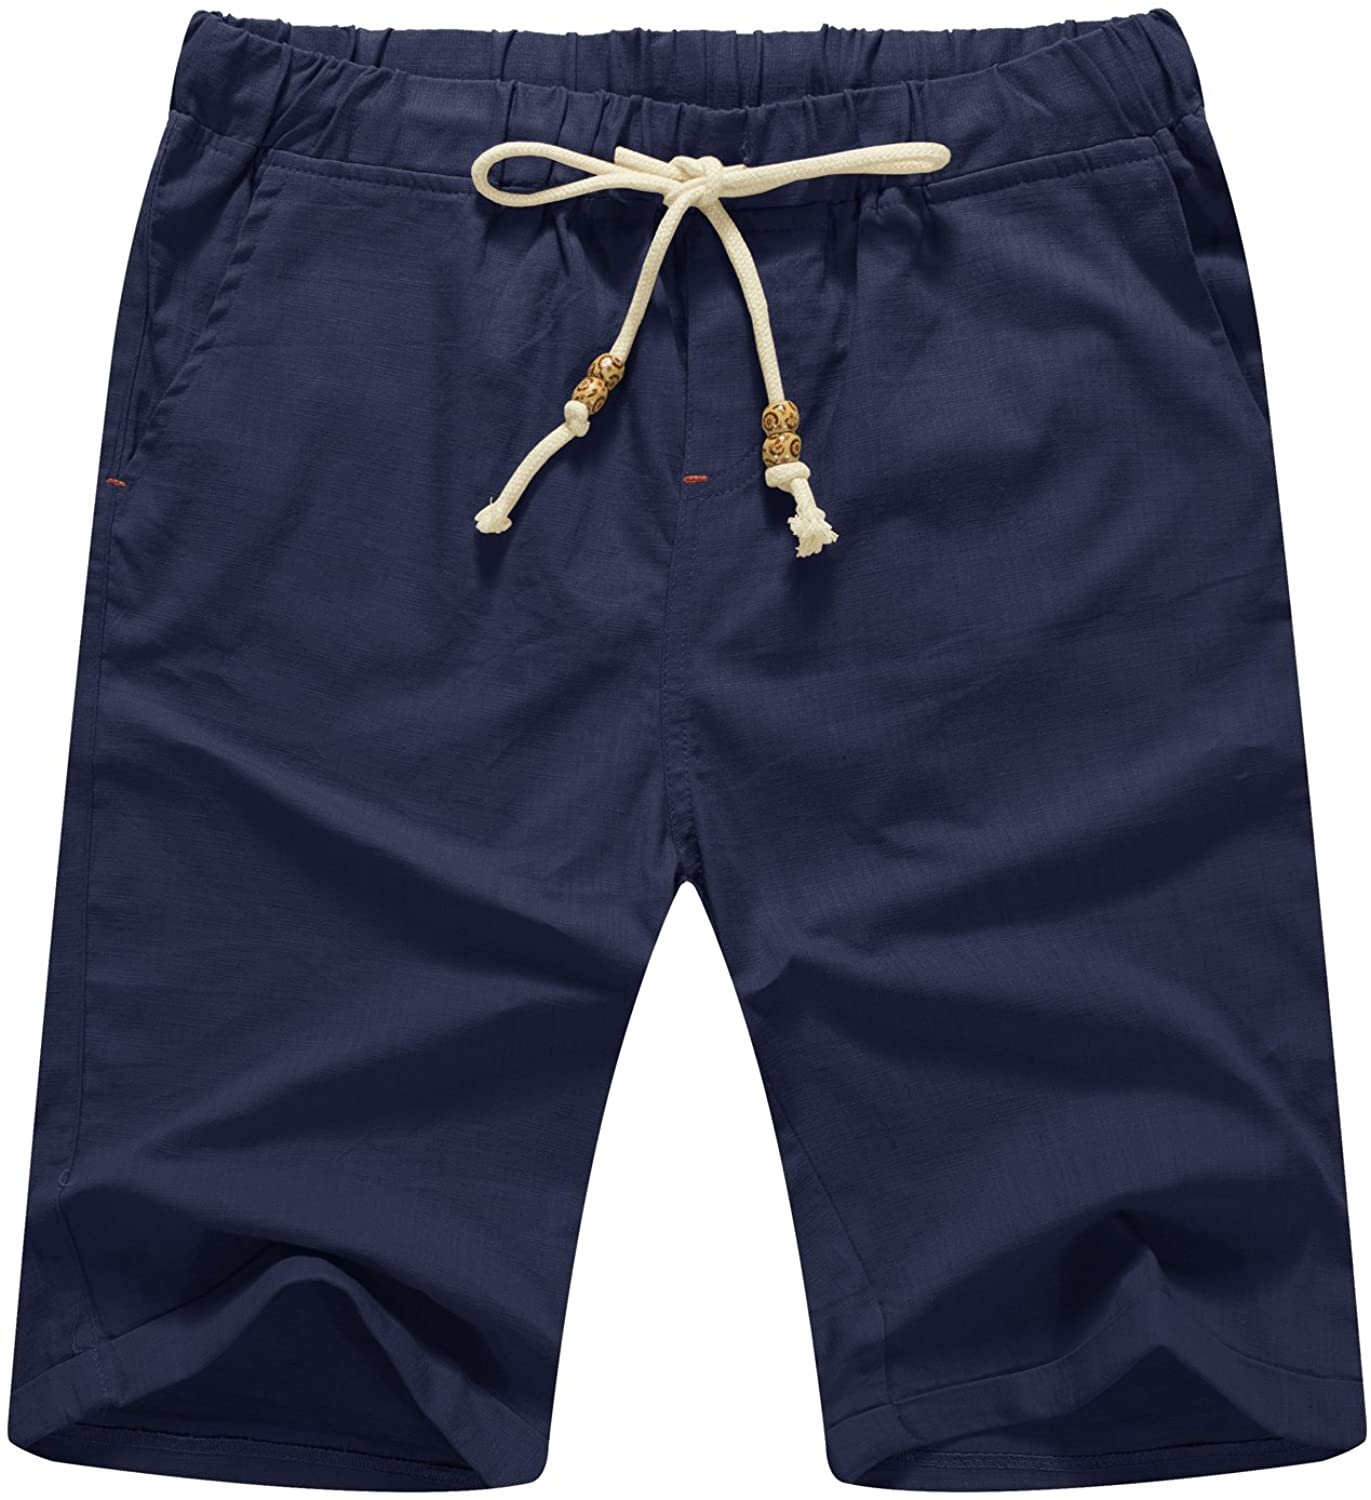 Sailwind Men’s Linen Shorts Casual Drawstring Summer Beach Shorts 